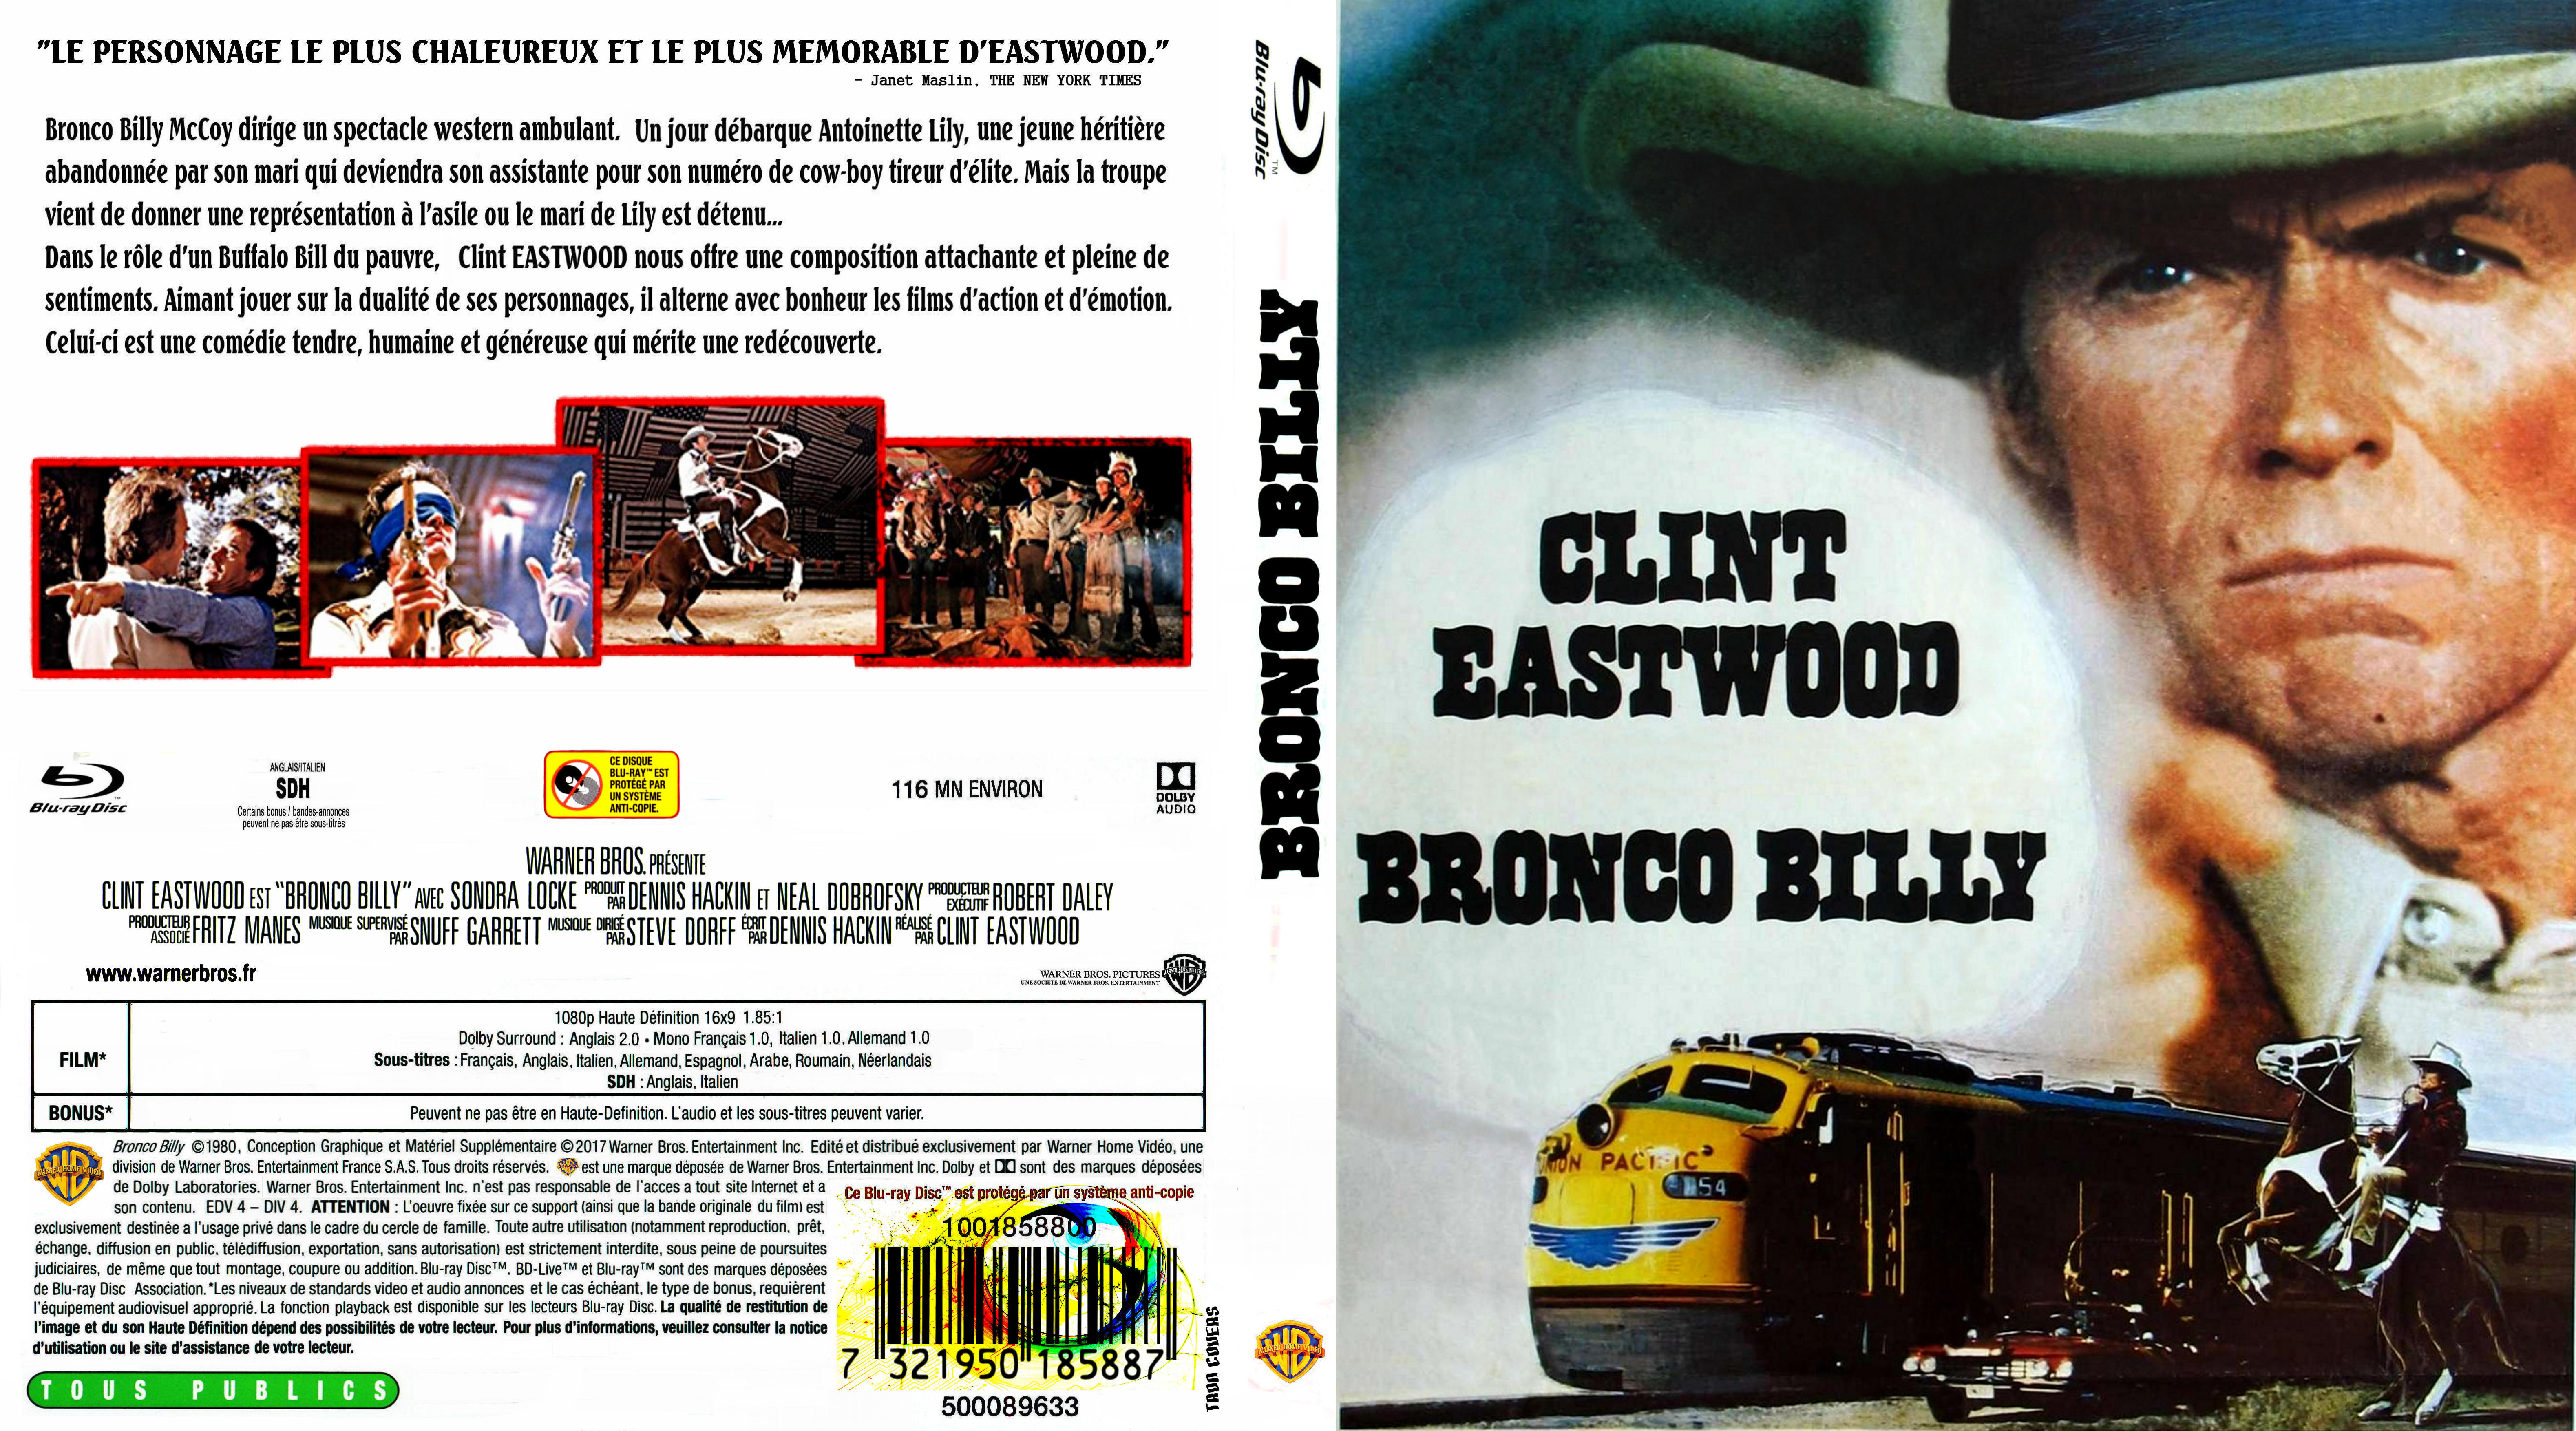 Jaquette DVD Bronco Billy custom (BLU-RAY)